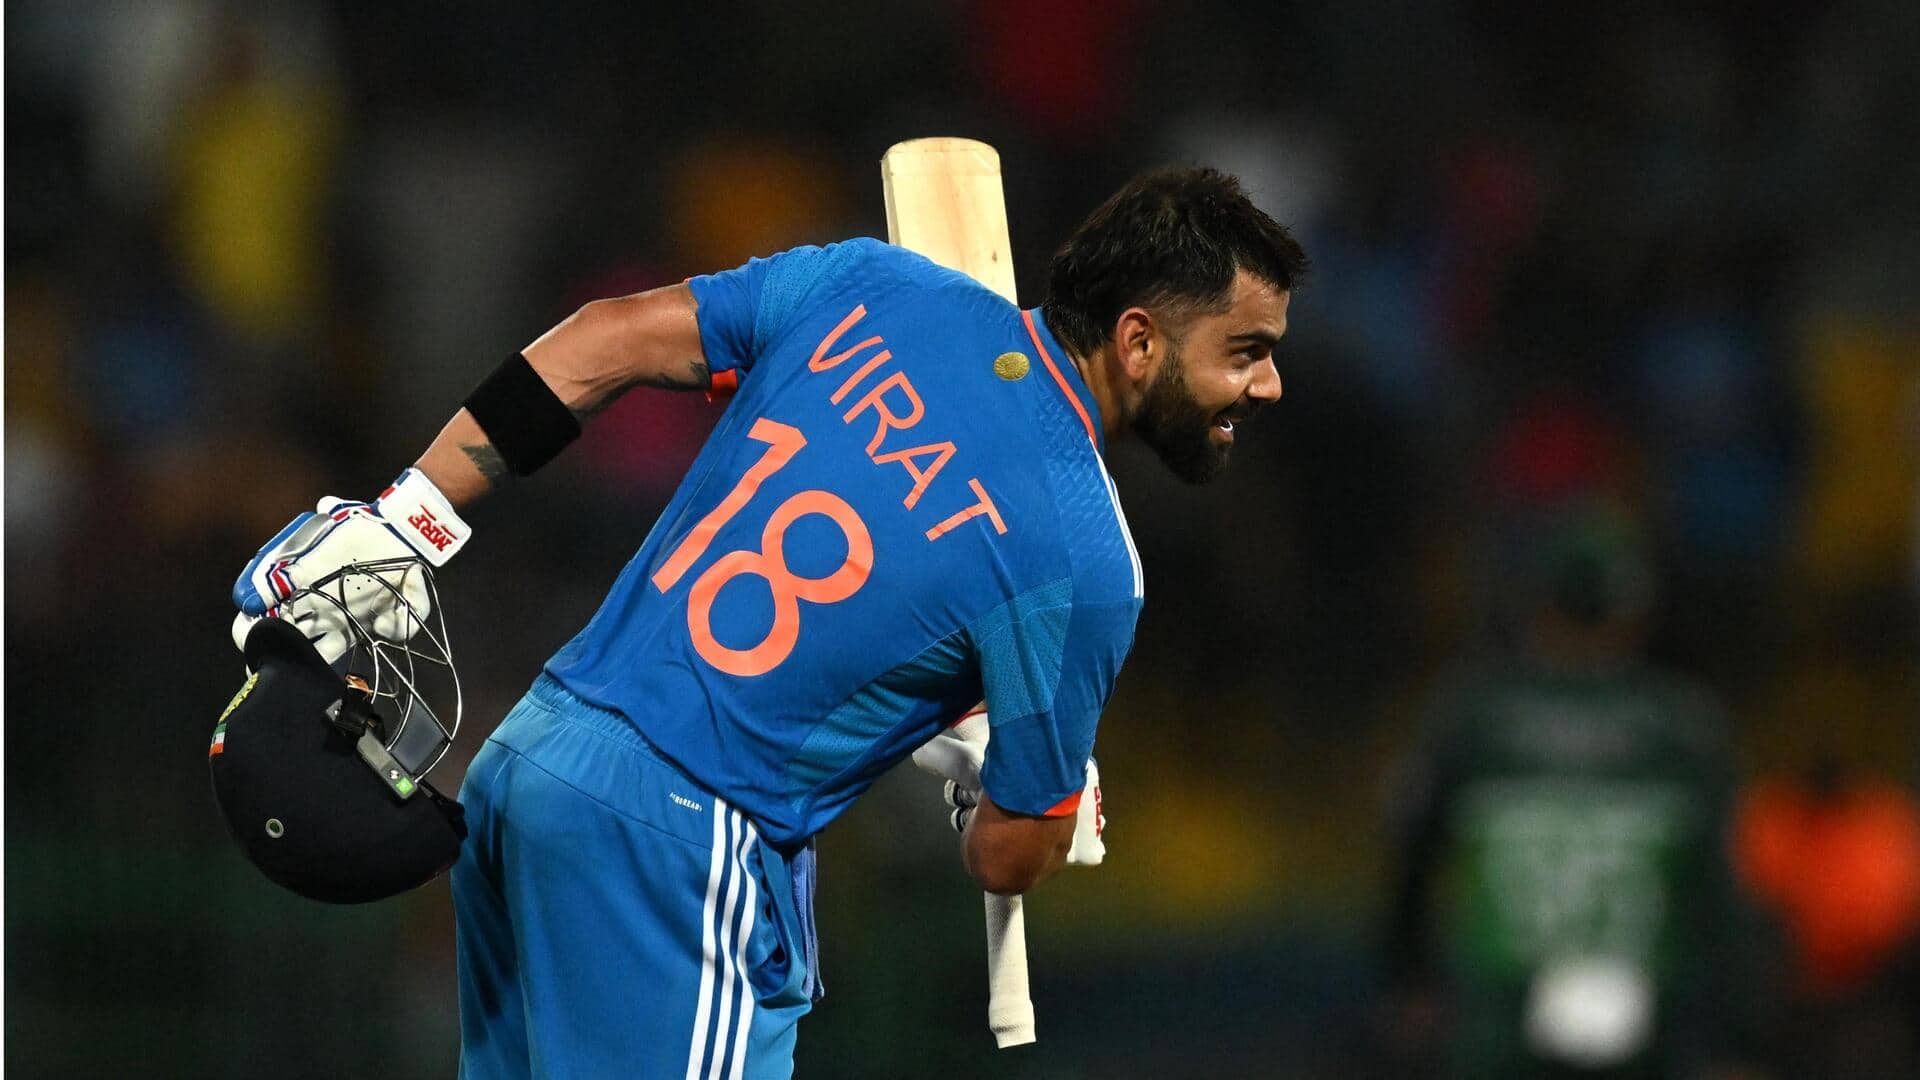 Virat Kohli vs Sachin Tendulkar: Breaking down their ODI numbers